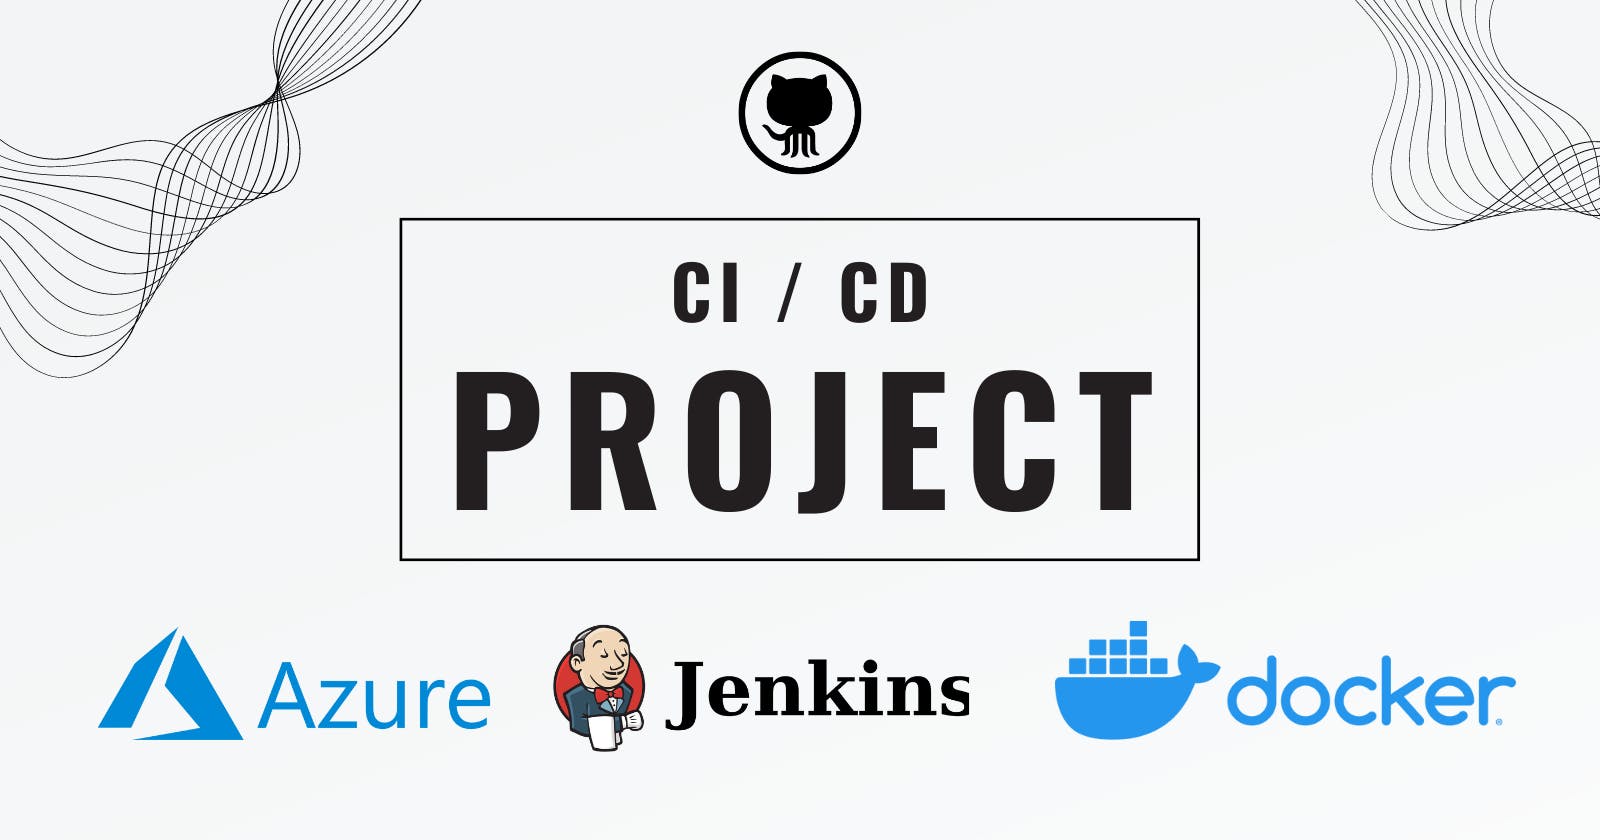 CI/CD Project using Azure, Jenkins, and Docker